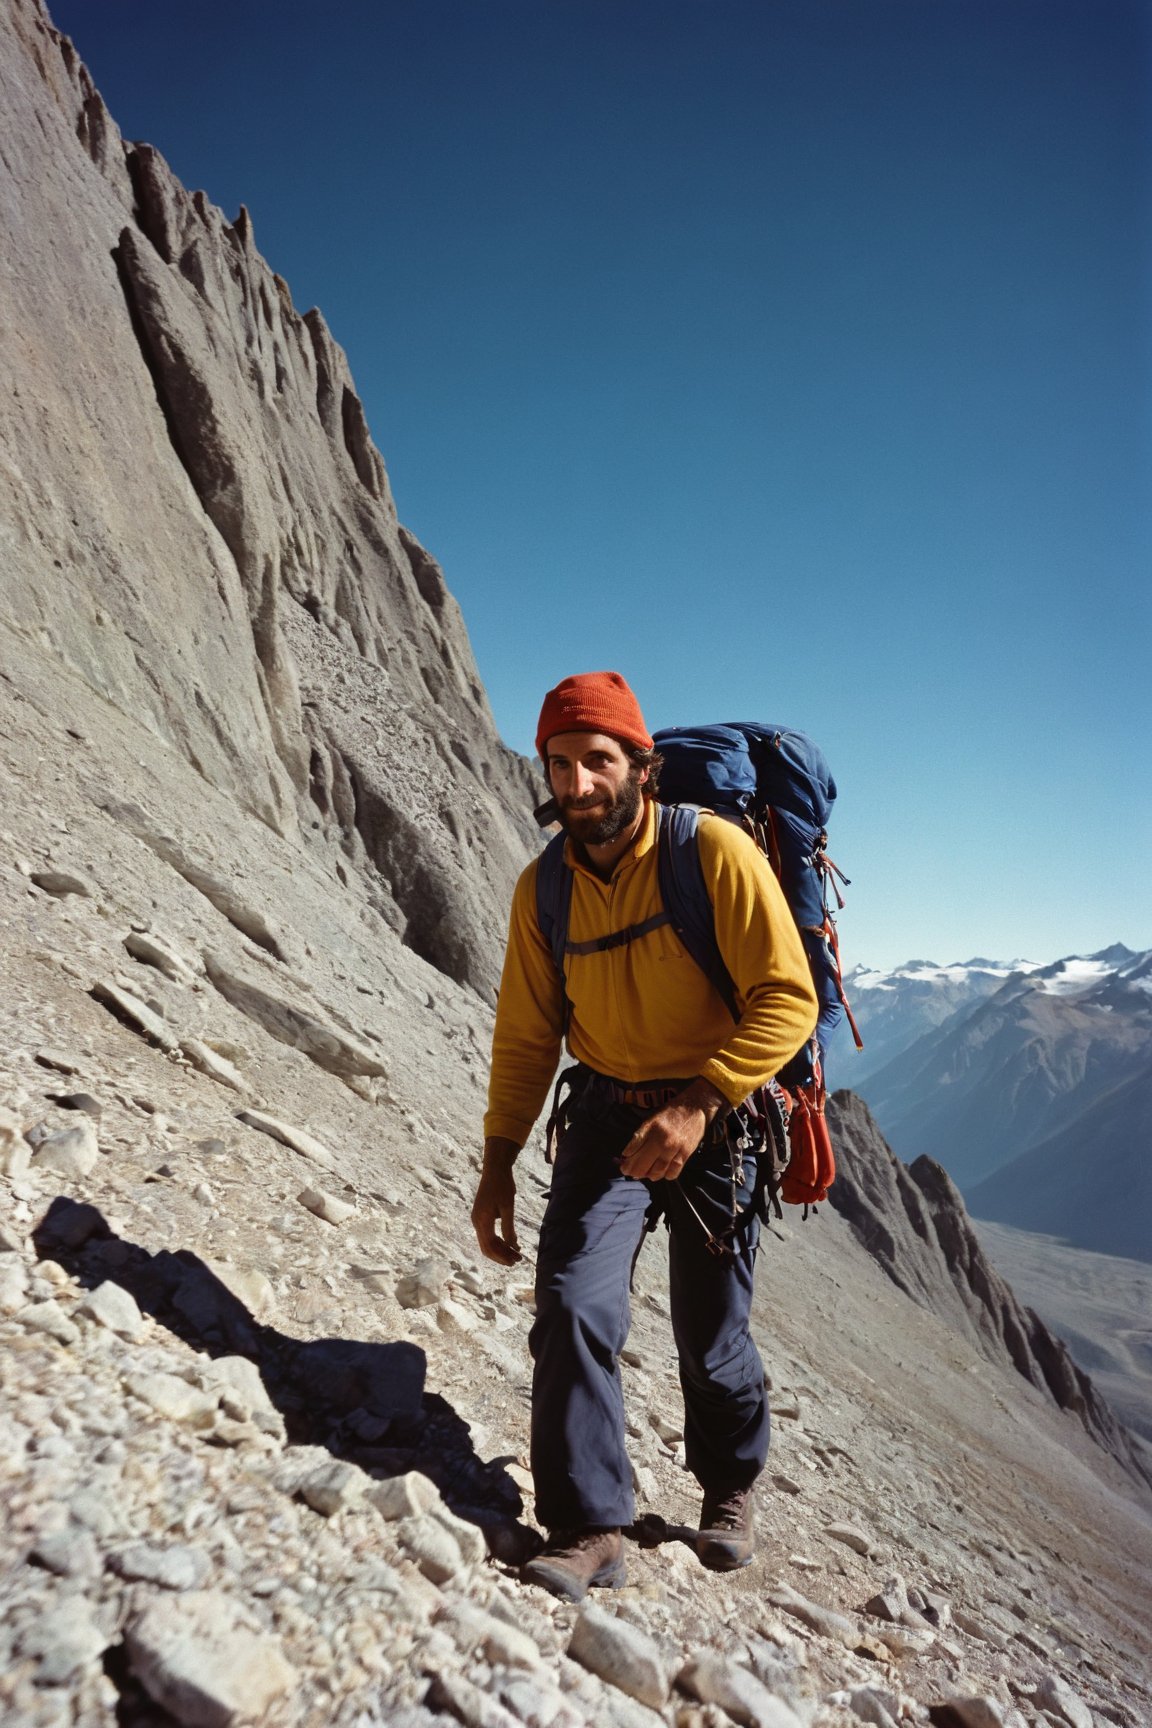 RAW Photo, a Chilean adventurer, climbing a mountain, hyperdetailed photo, Kodak Ektar 100, rich emotive colors, DSLR